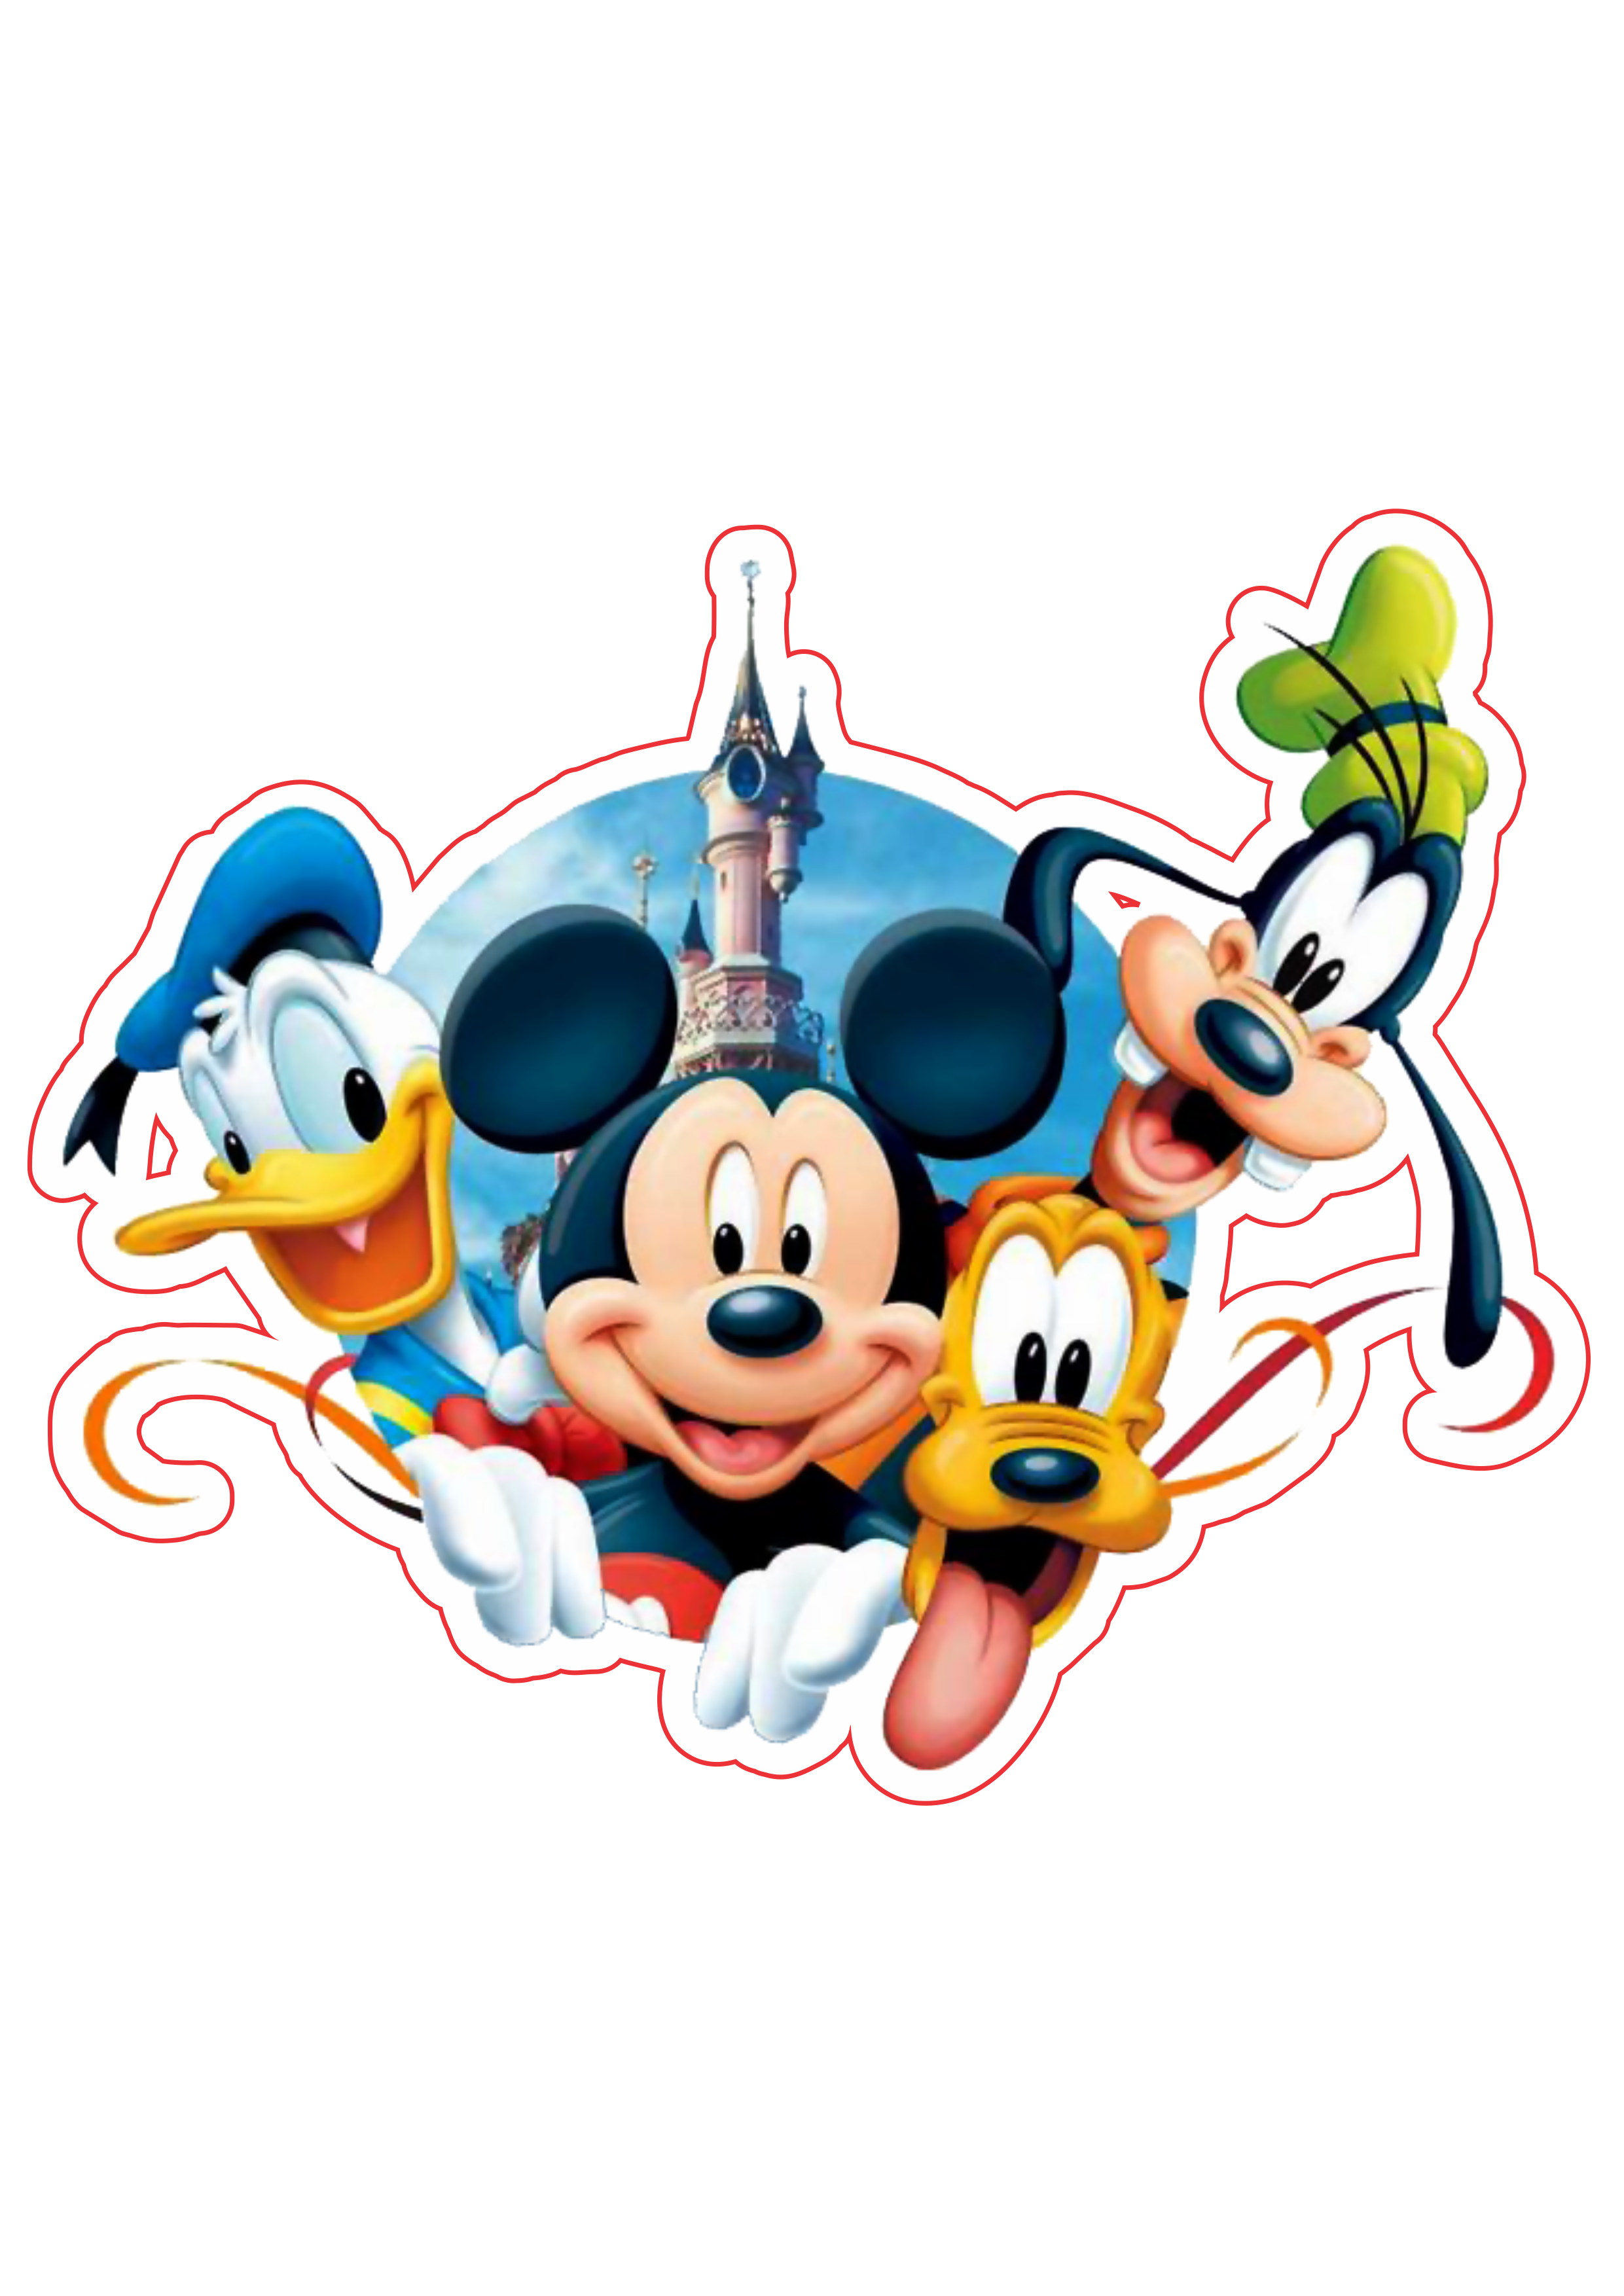 Disney turma do mickey mouse png